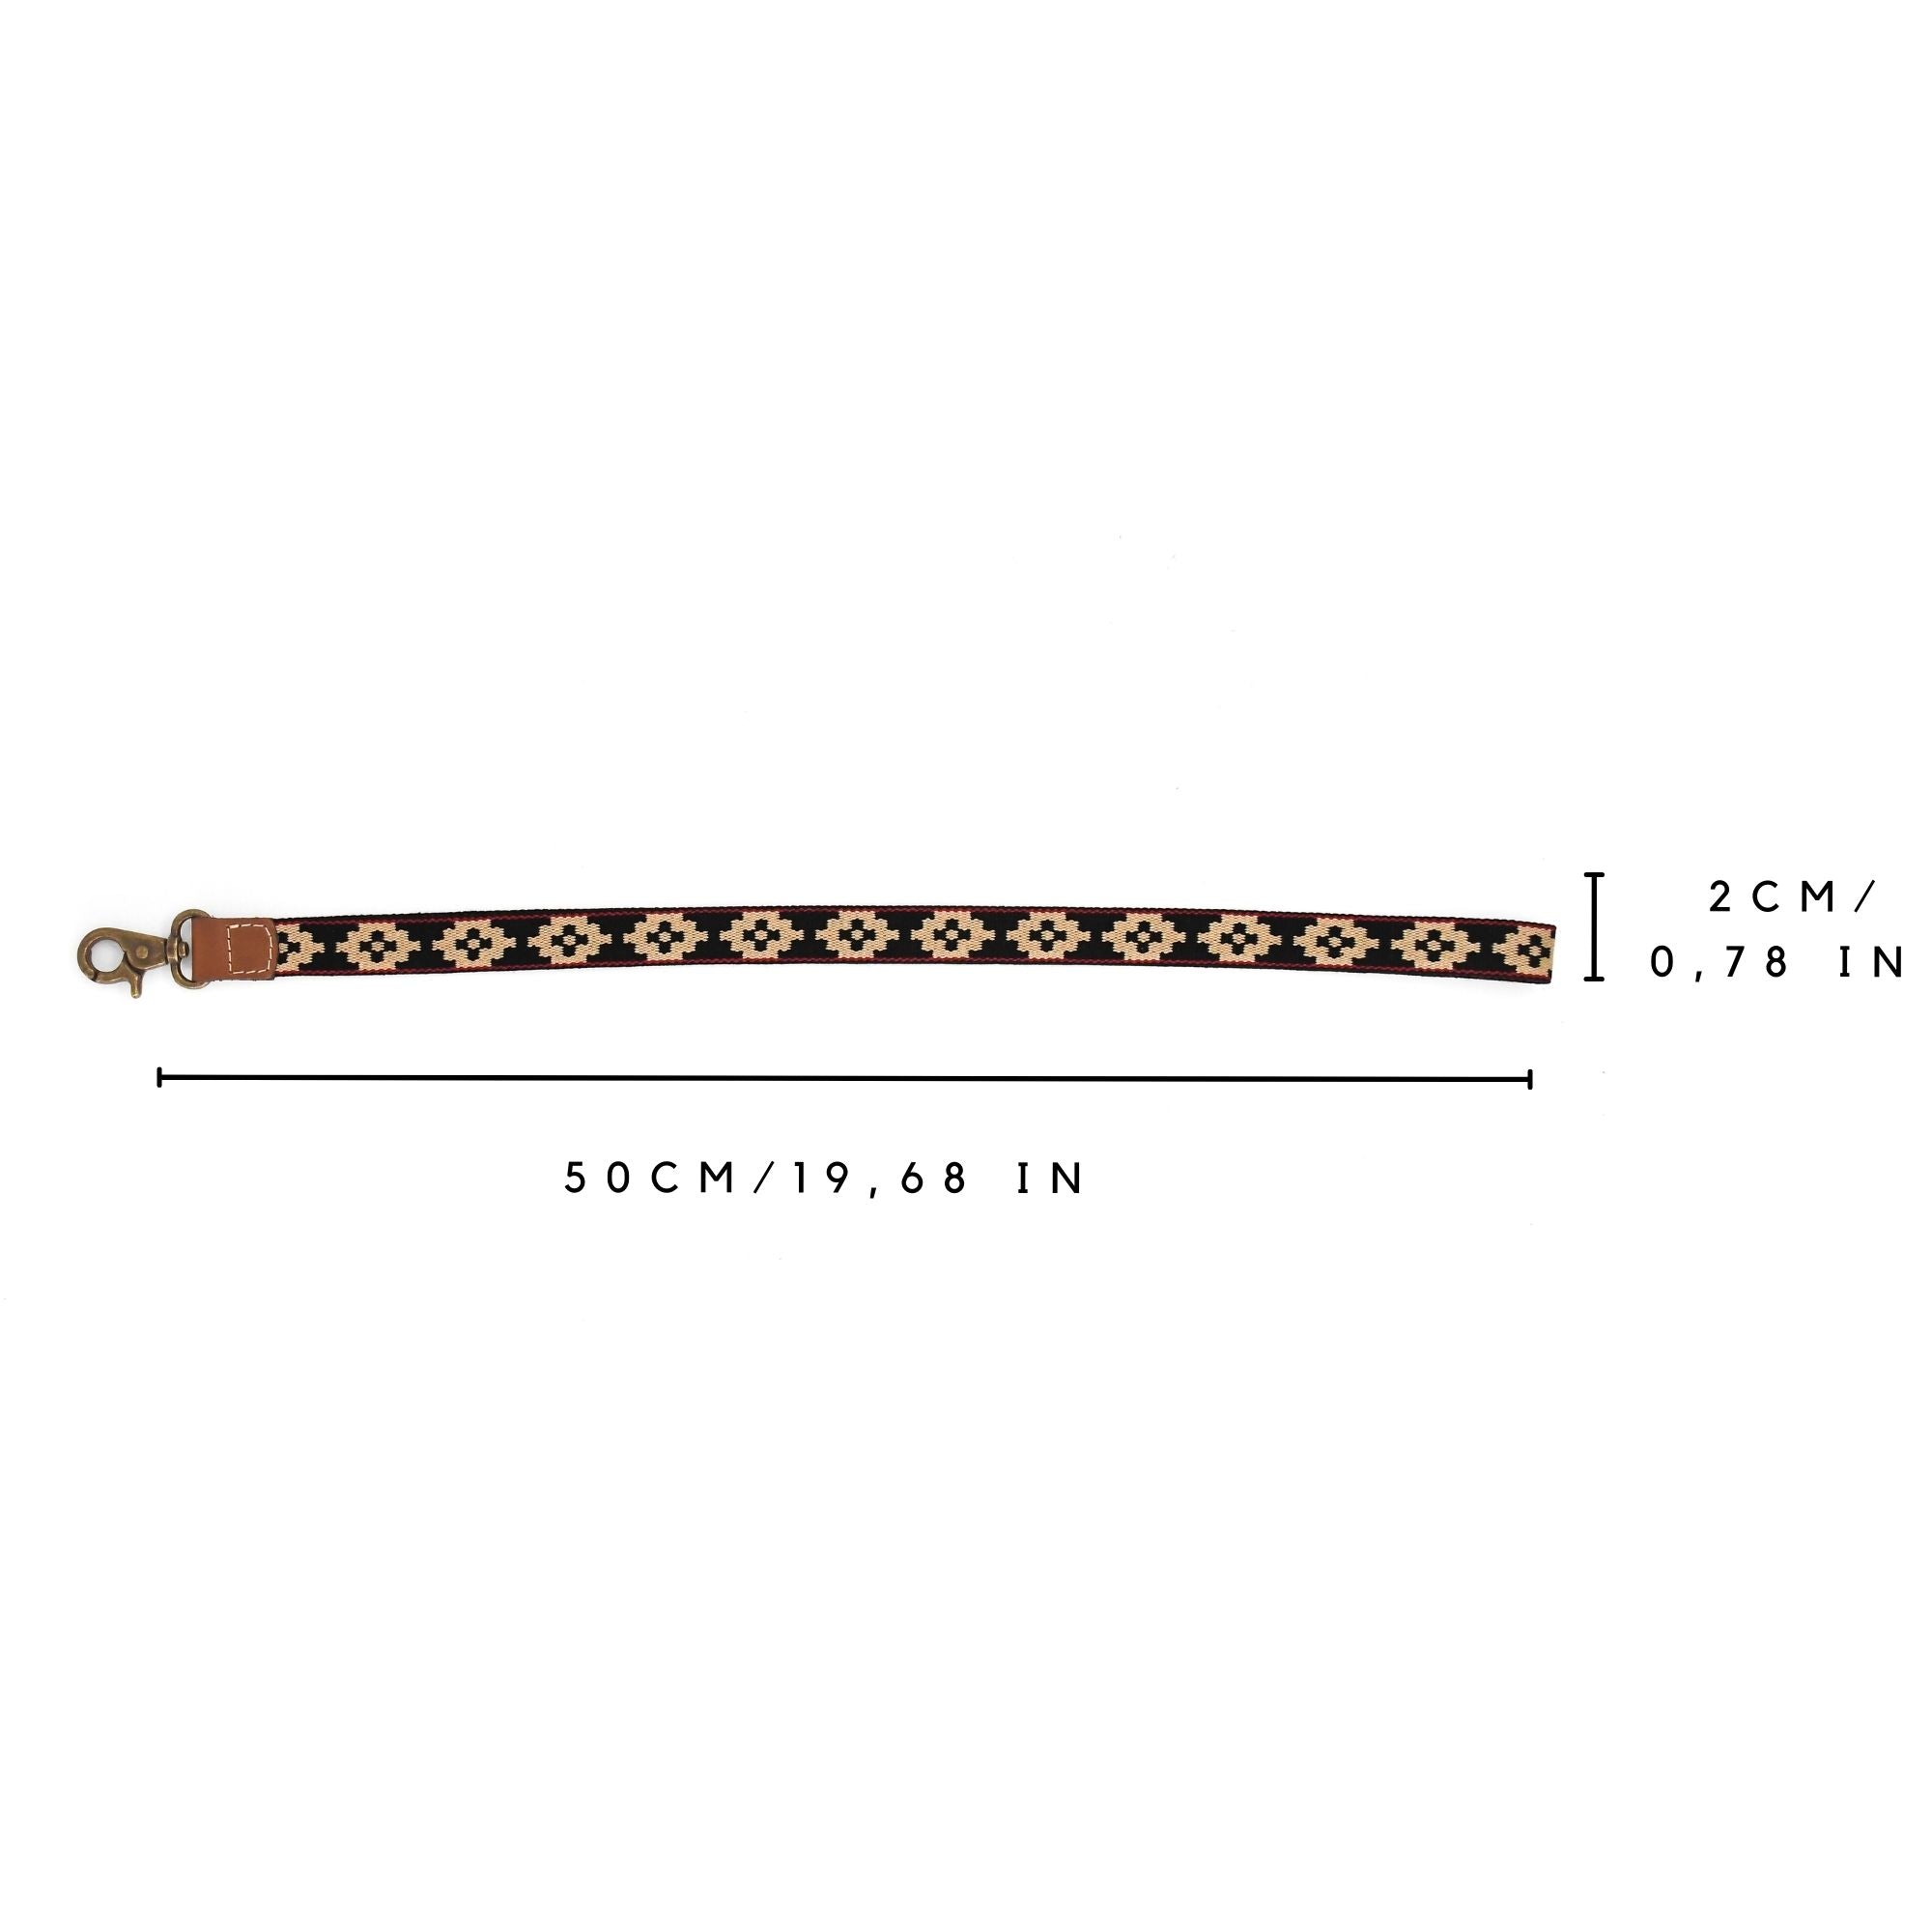 Gaucholife Keychain Leather Necklace Lanyard (Black/Tan)